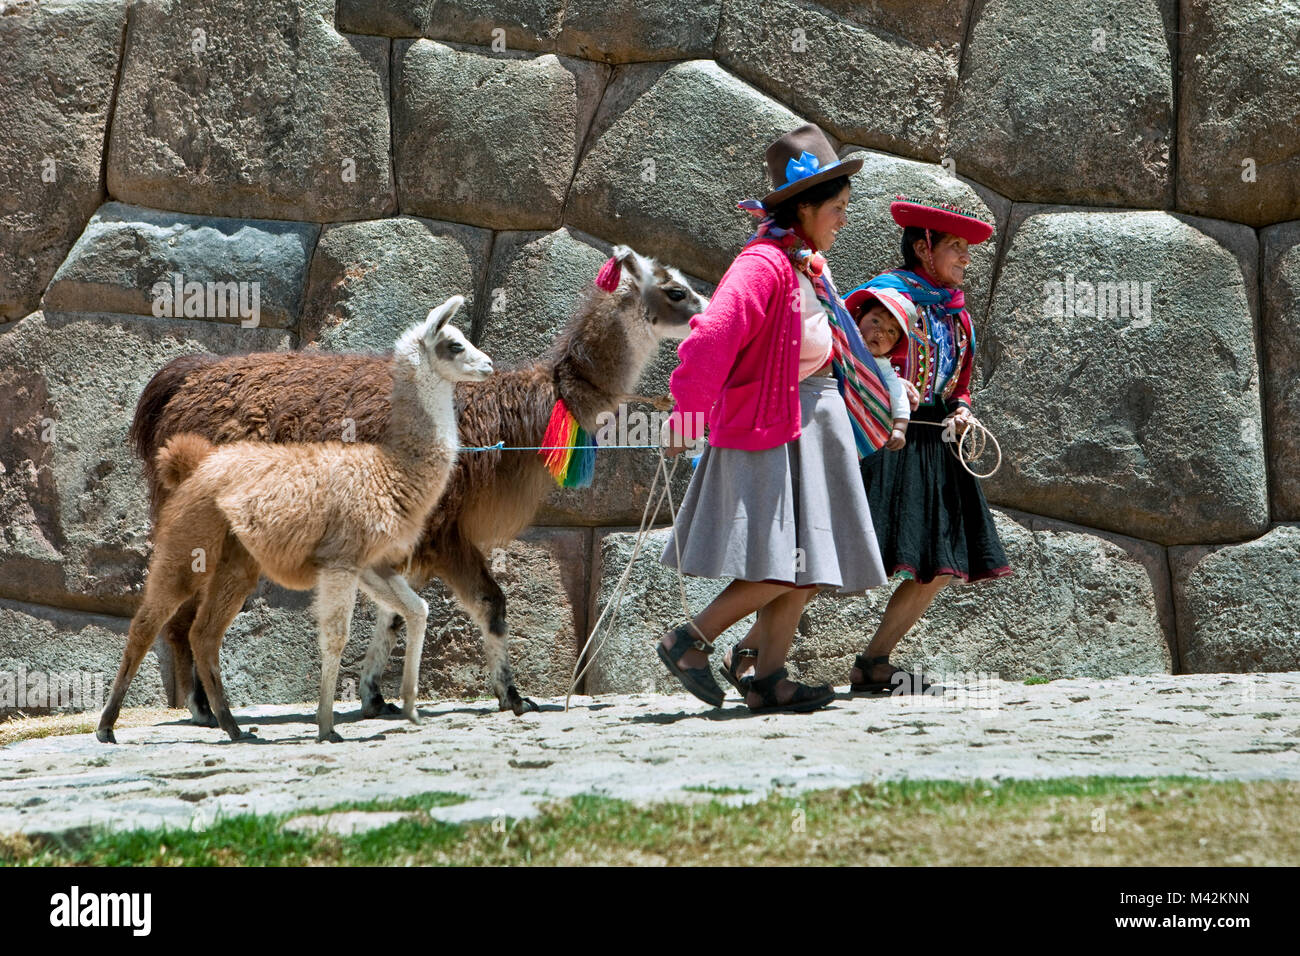 Peru, Cusco, Cuzco, Saqsayhuaman, Sacsayhuaman, Sacsaywaman. Ruins. Unesco World Heritage Site. Indian women and baby with llamas. Stock Photo